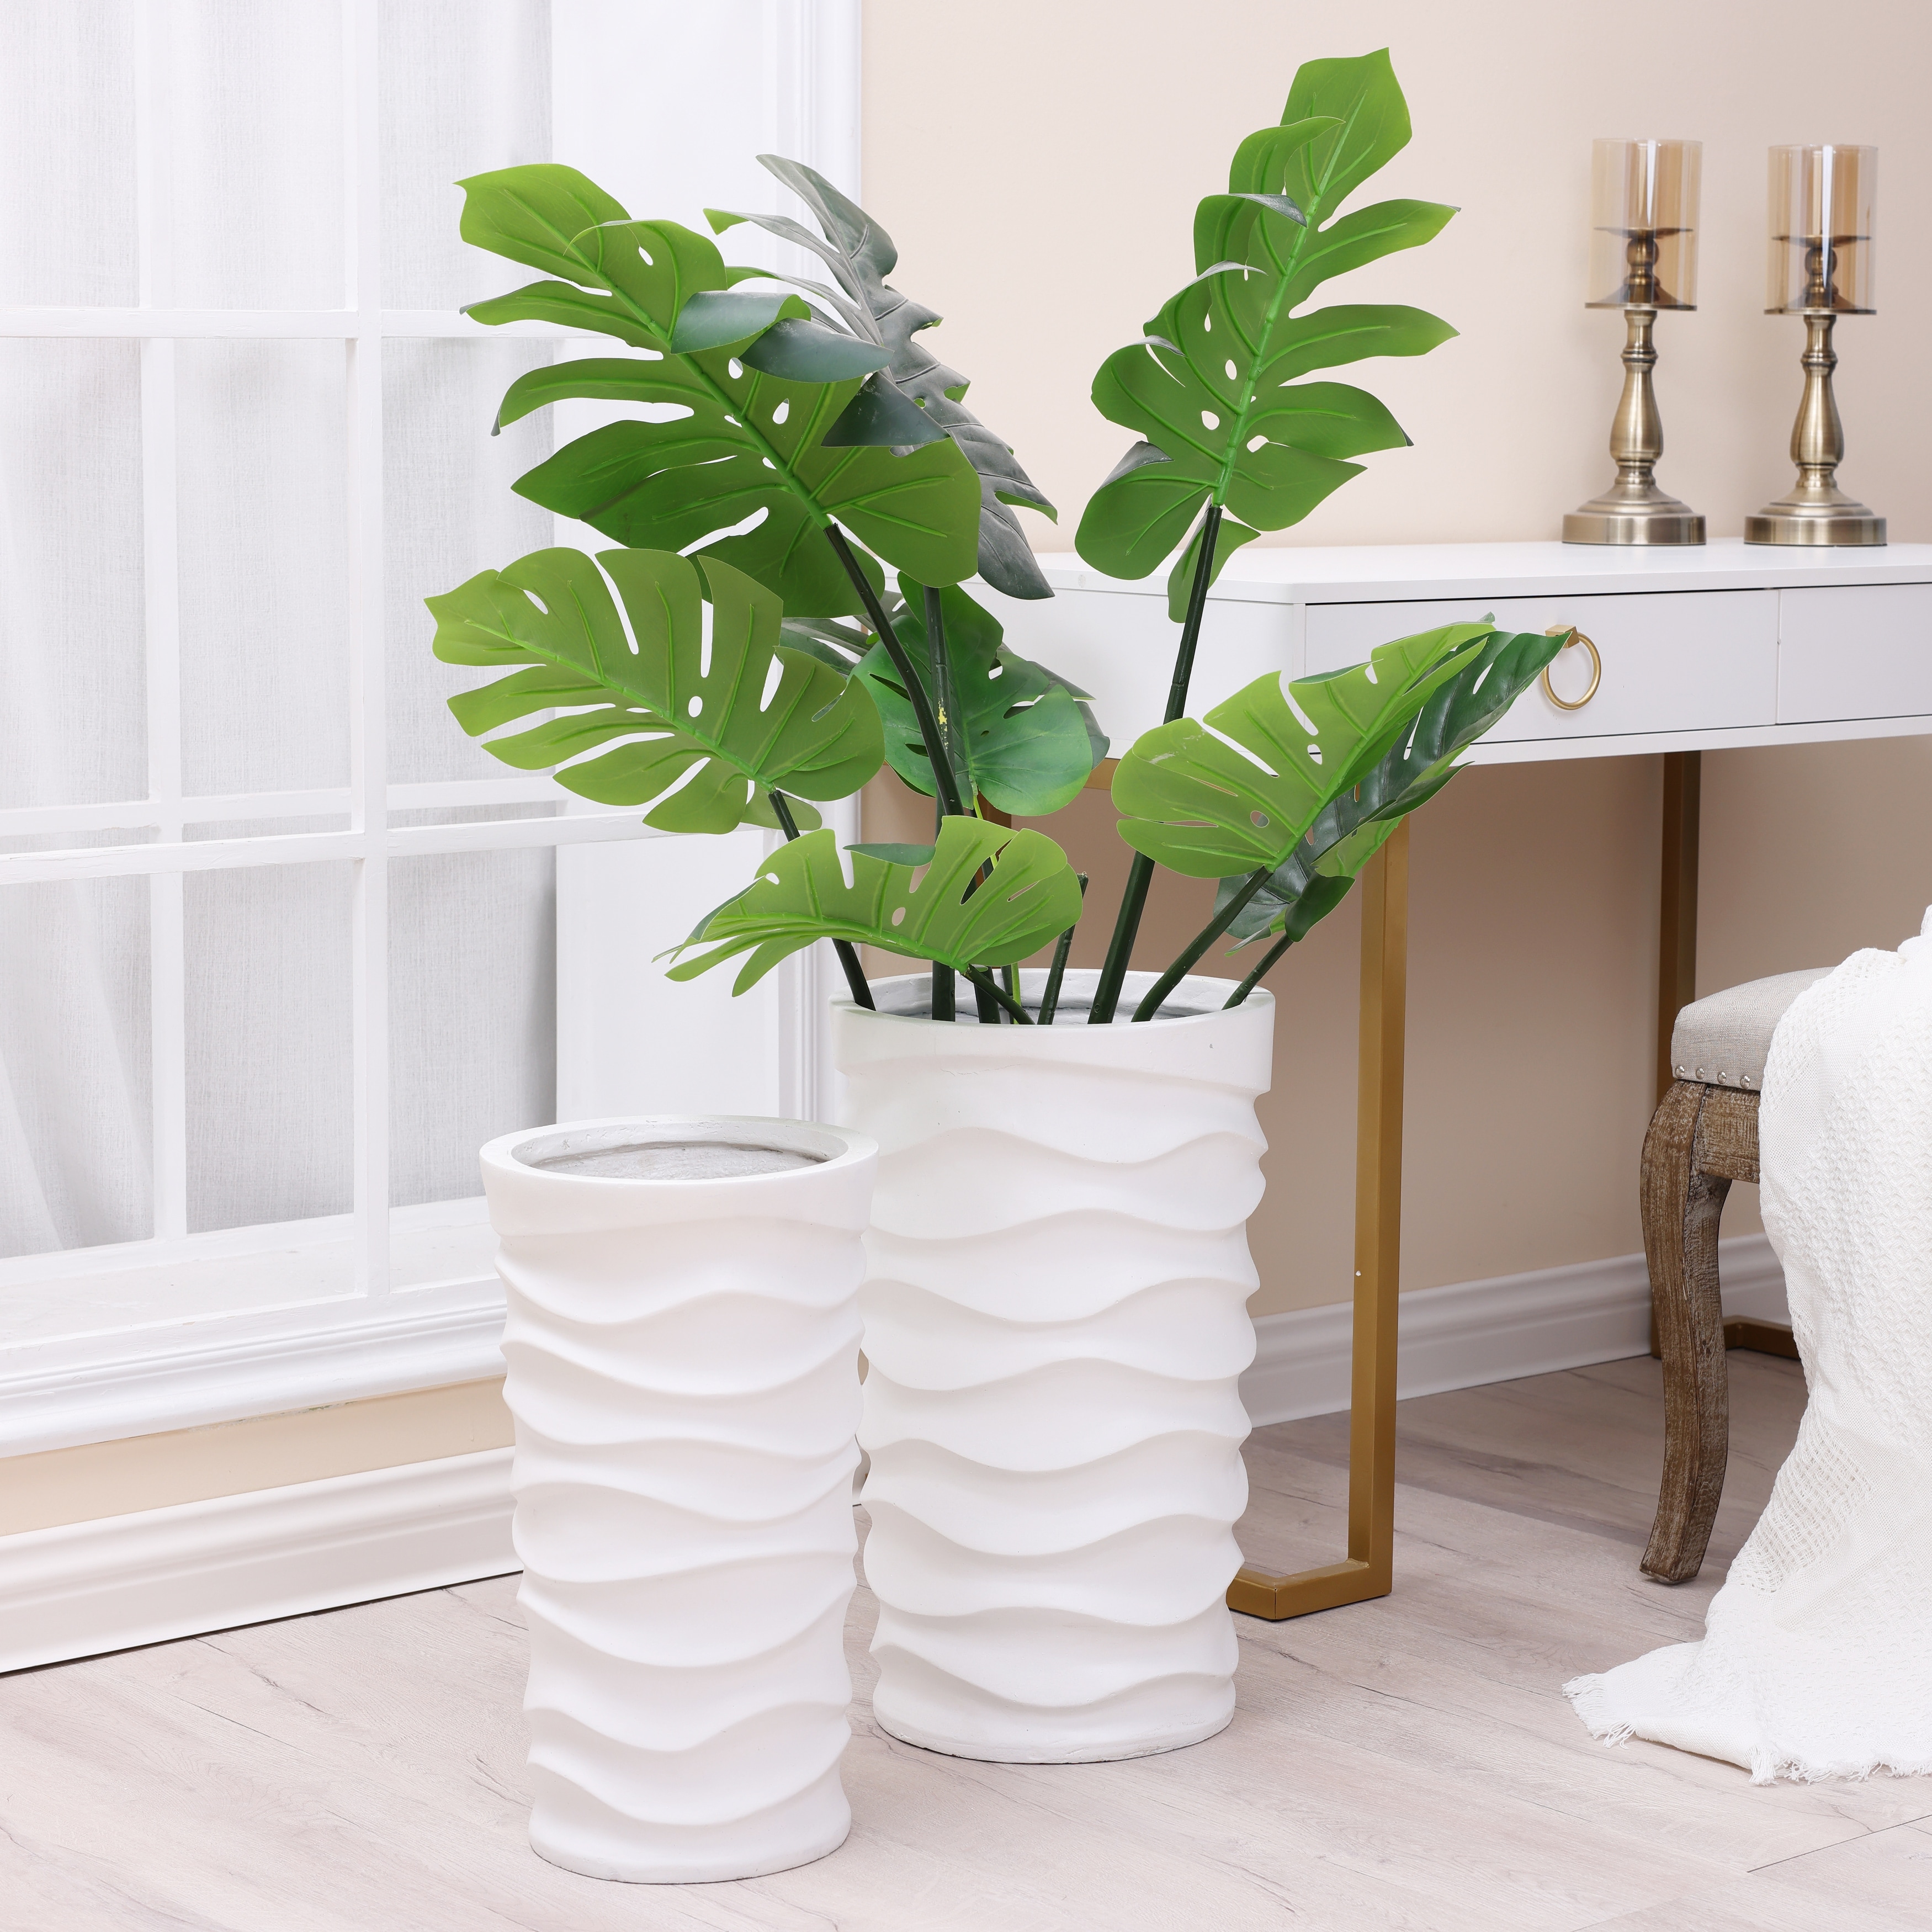 Pot - Modern Houseplant Pots & Vessels by Braid & Wood